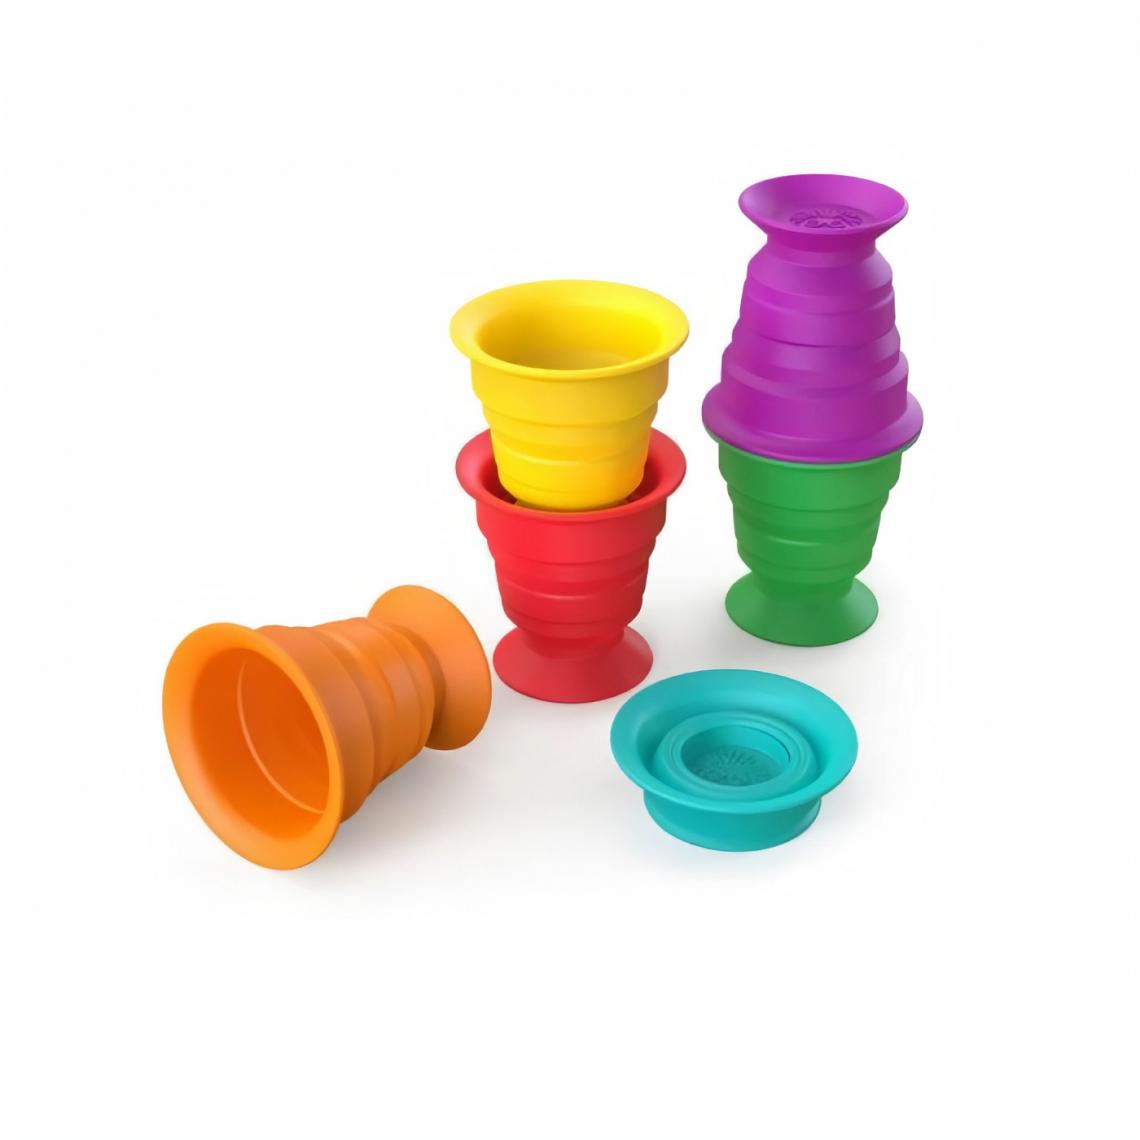 Tommee Tippee - BABY EINSTEIN squish & stack cups - Jeux d'éveil